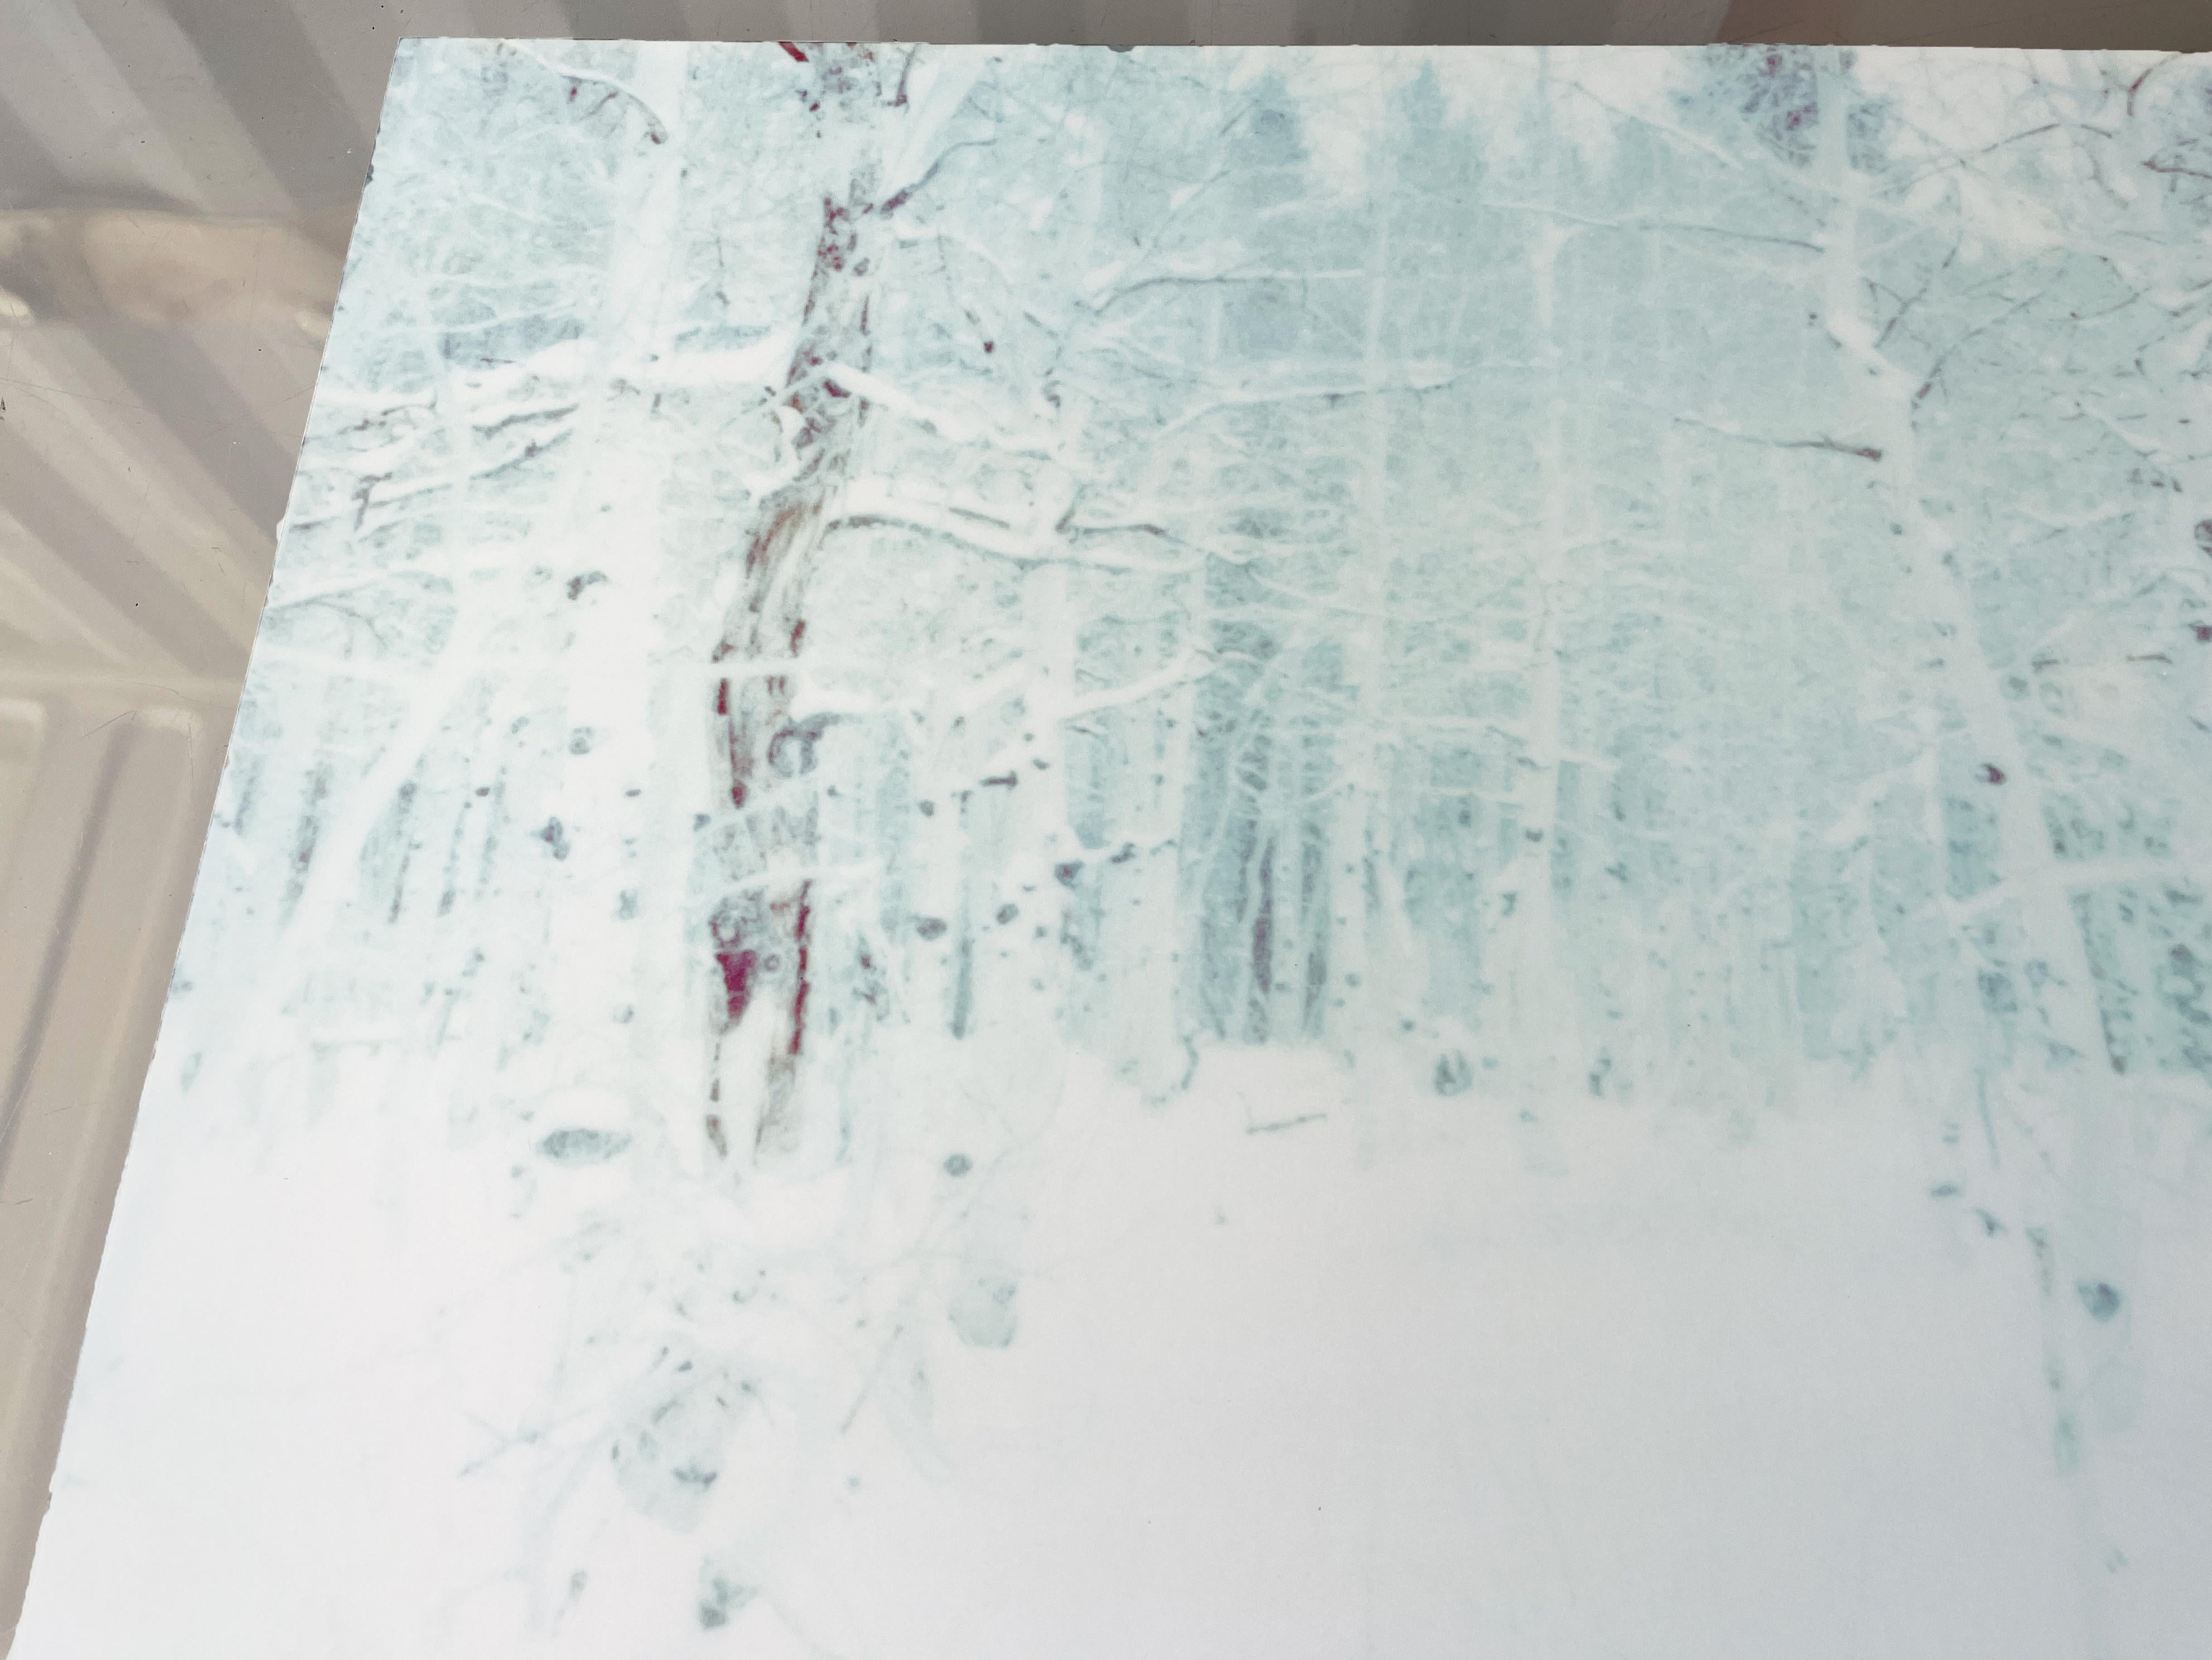 Winter (Wastelands) - Contemporary, Landscape, Polaroid - analog, mounted - Gray Landscape Photograph by Stefanie Schneider